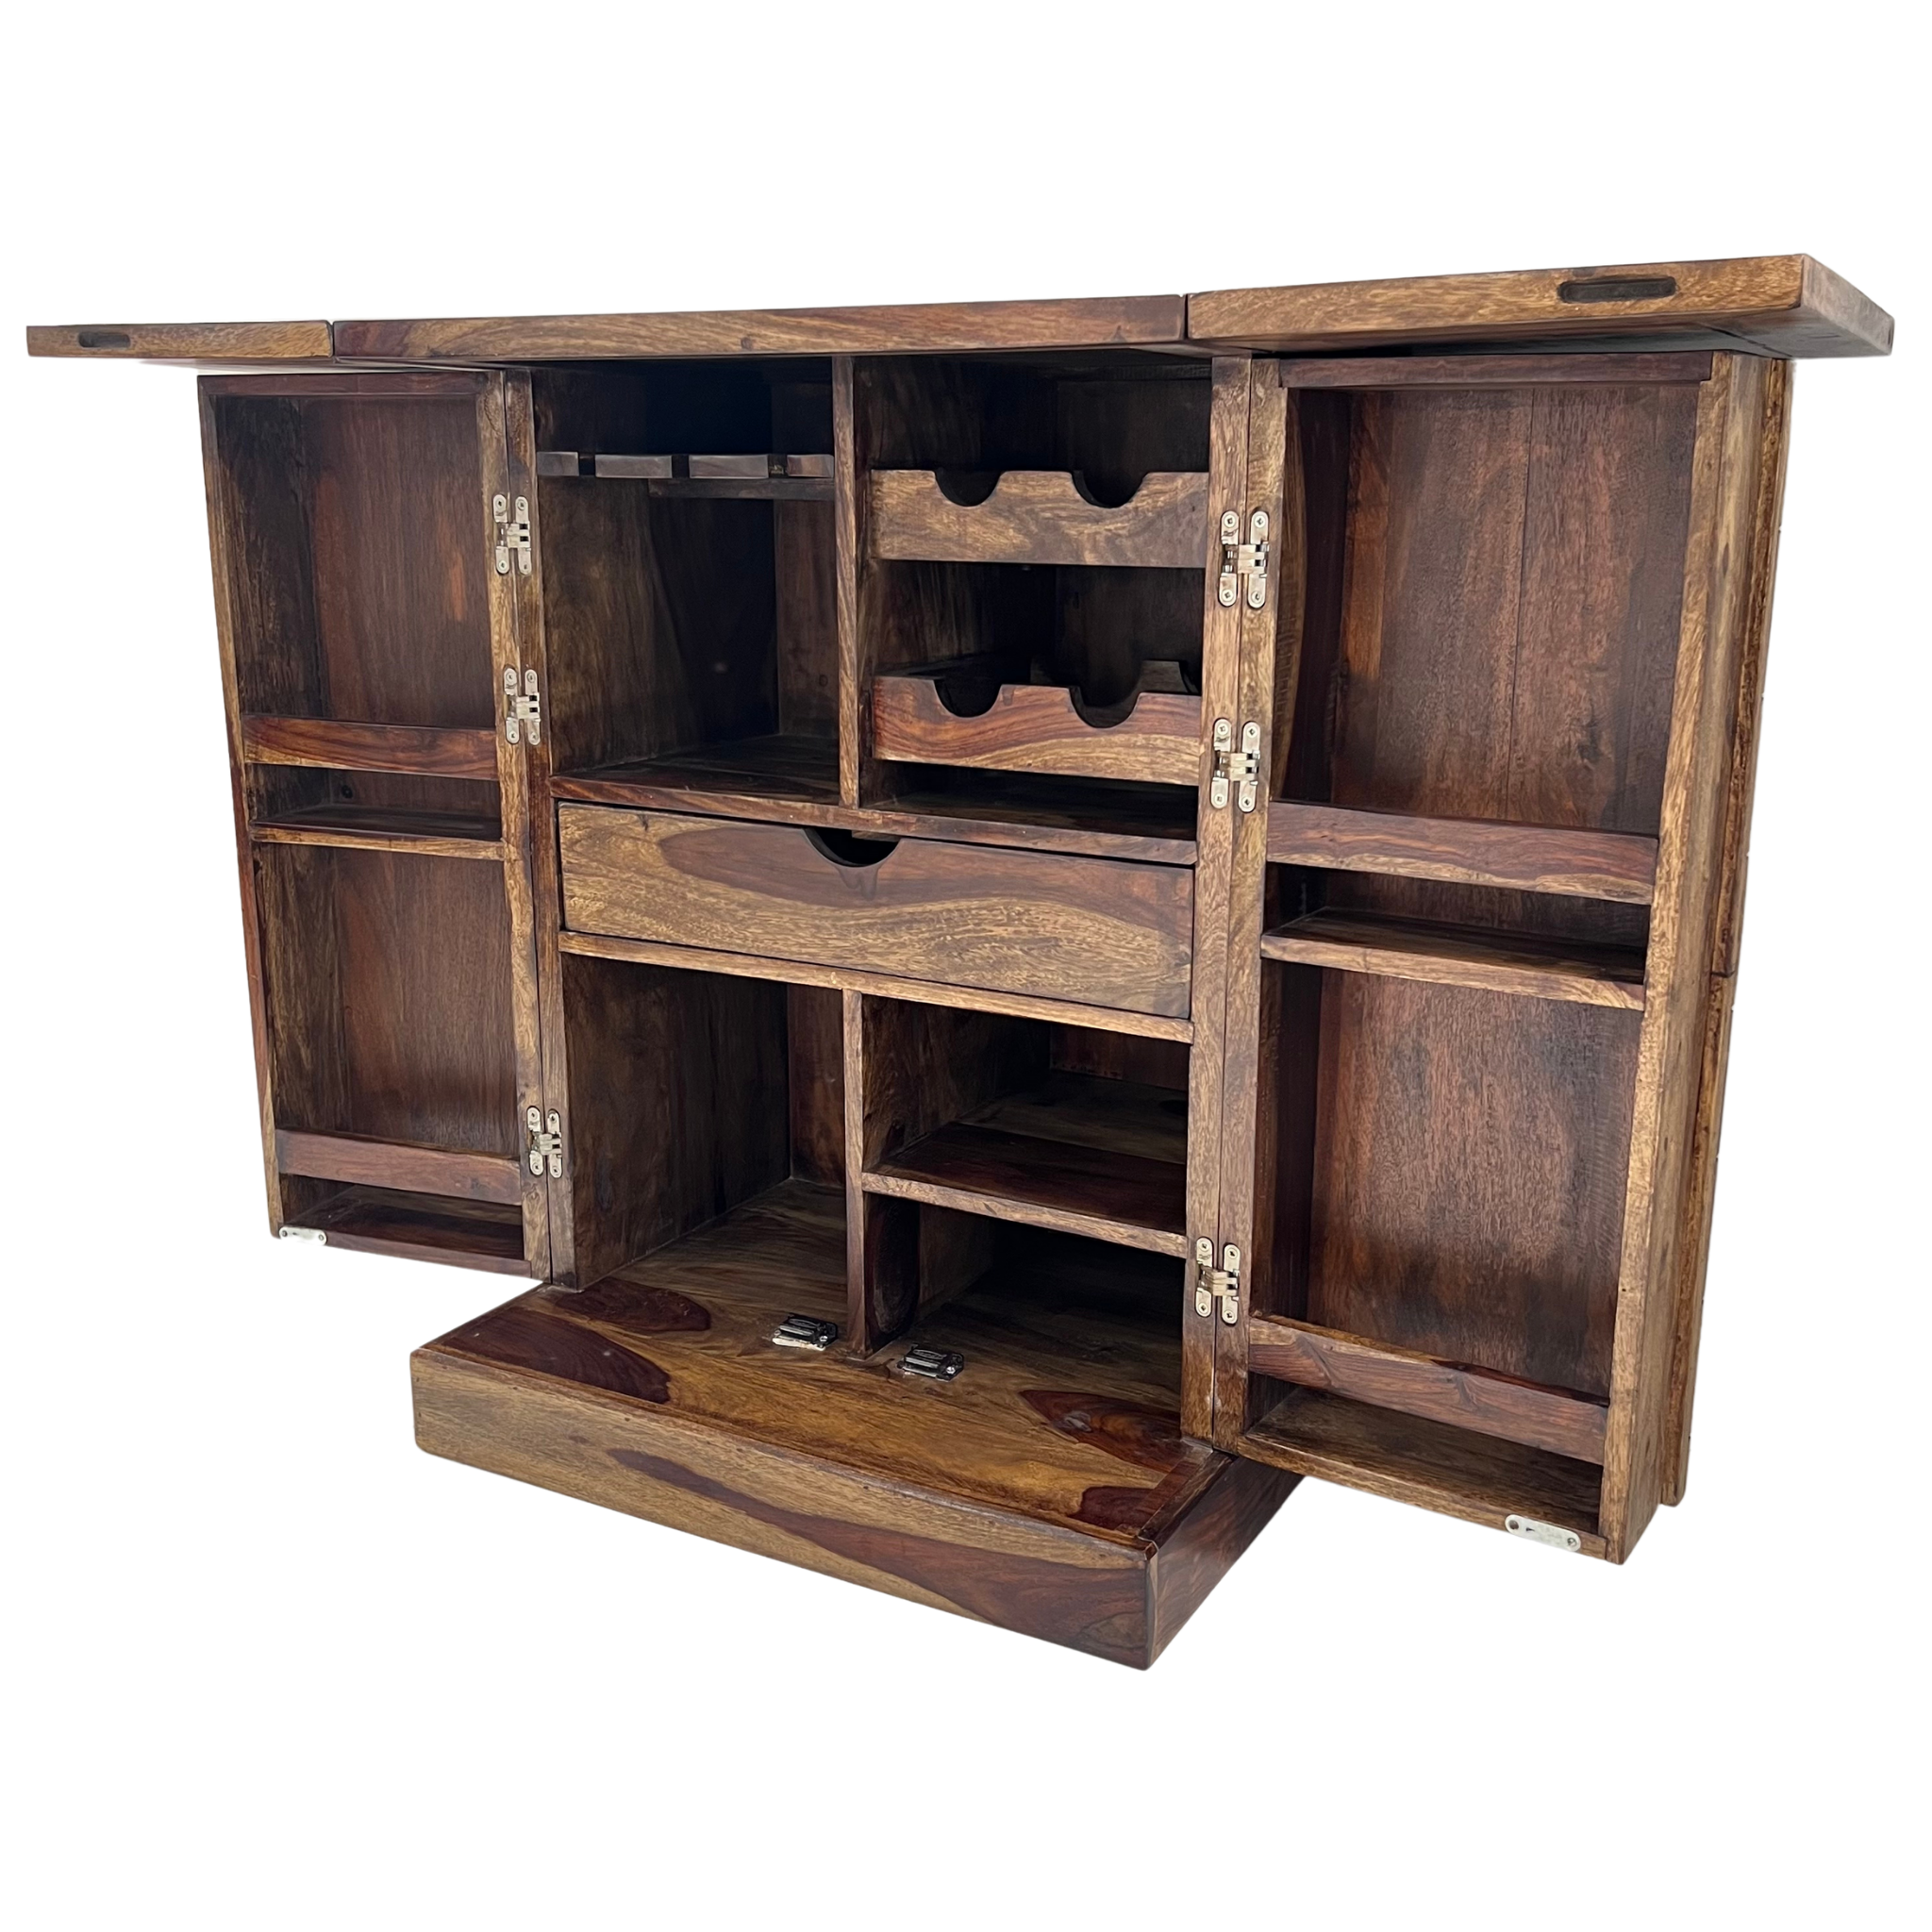 Diamond Wood Bar Cabinet: Stylish and Sophisticated